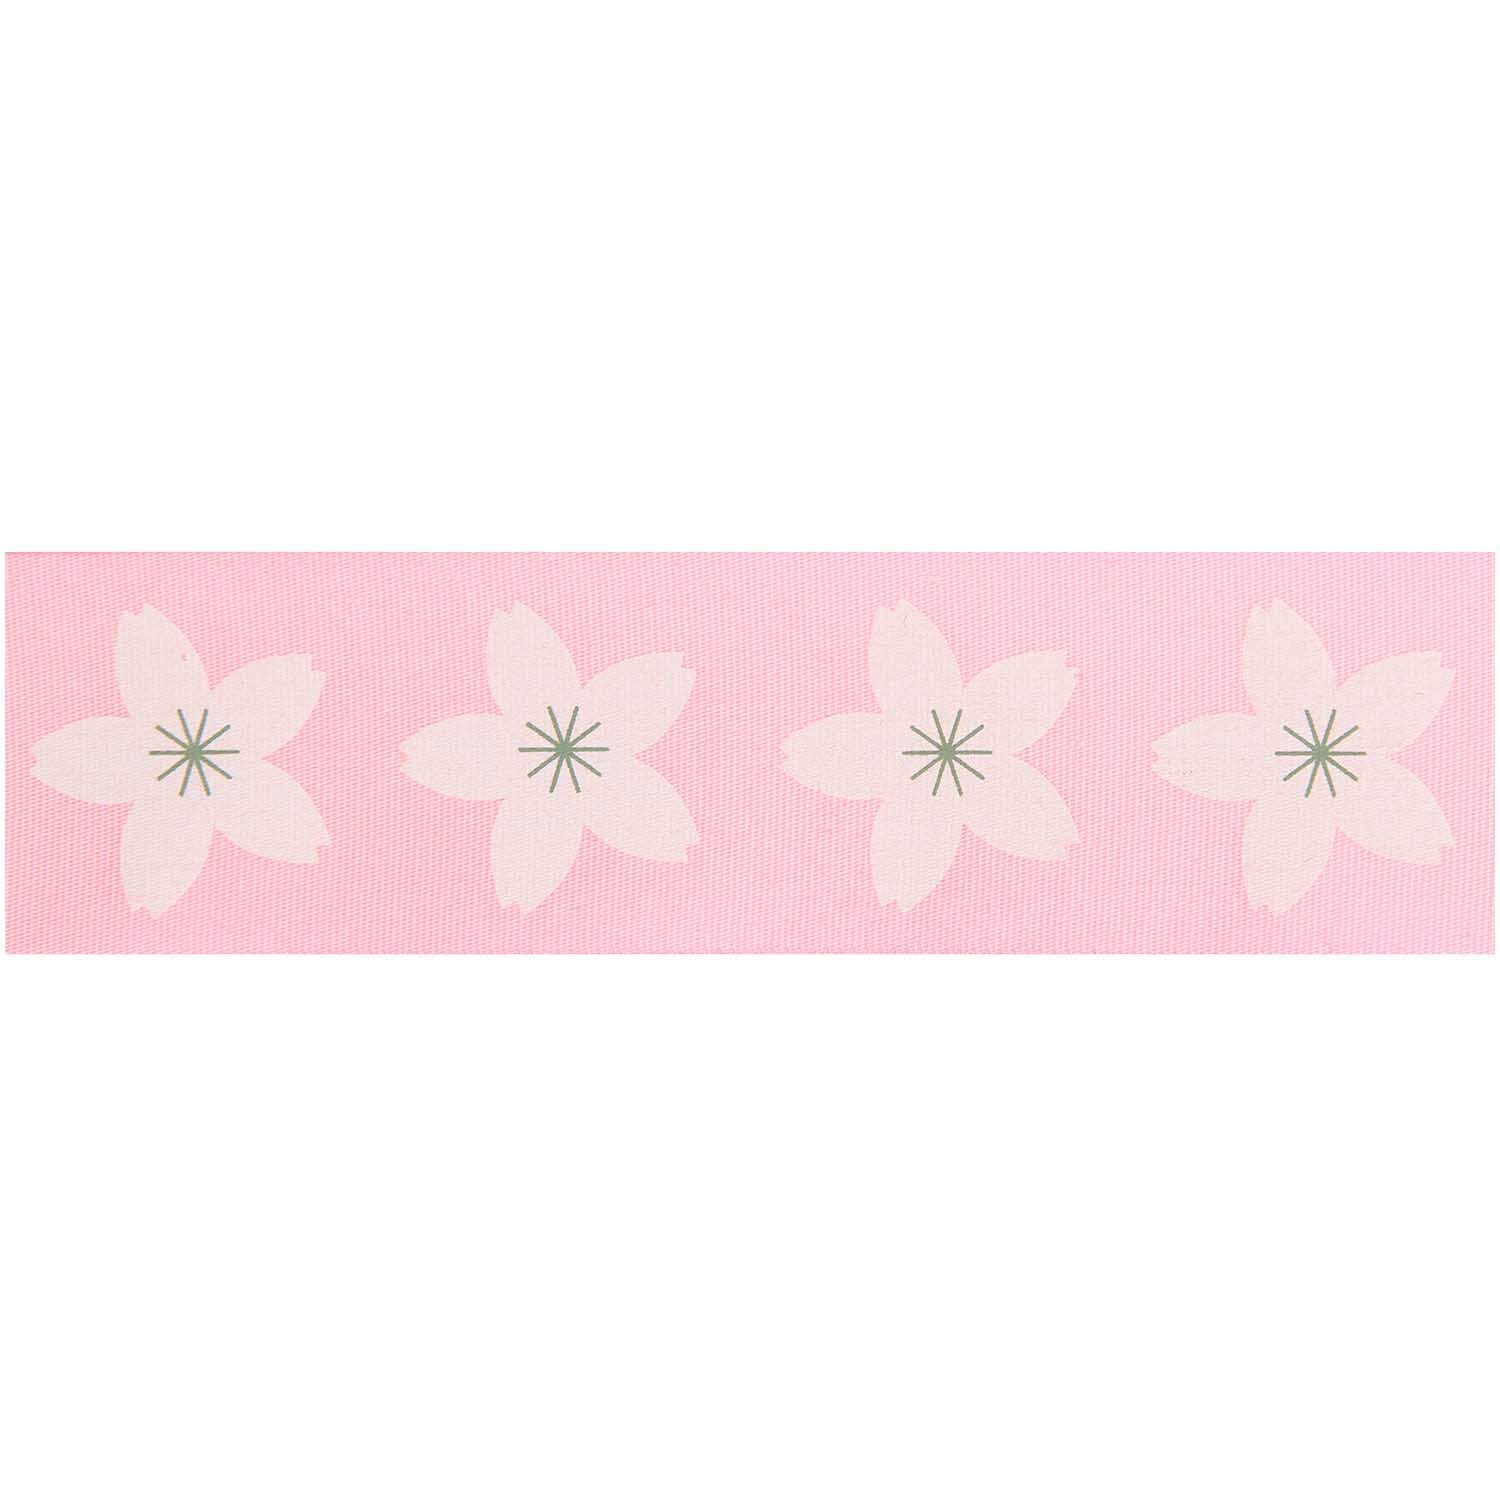 Paper Poetry Taftband Kirschblüten rosa 38mm 3m